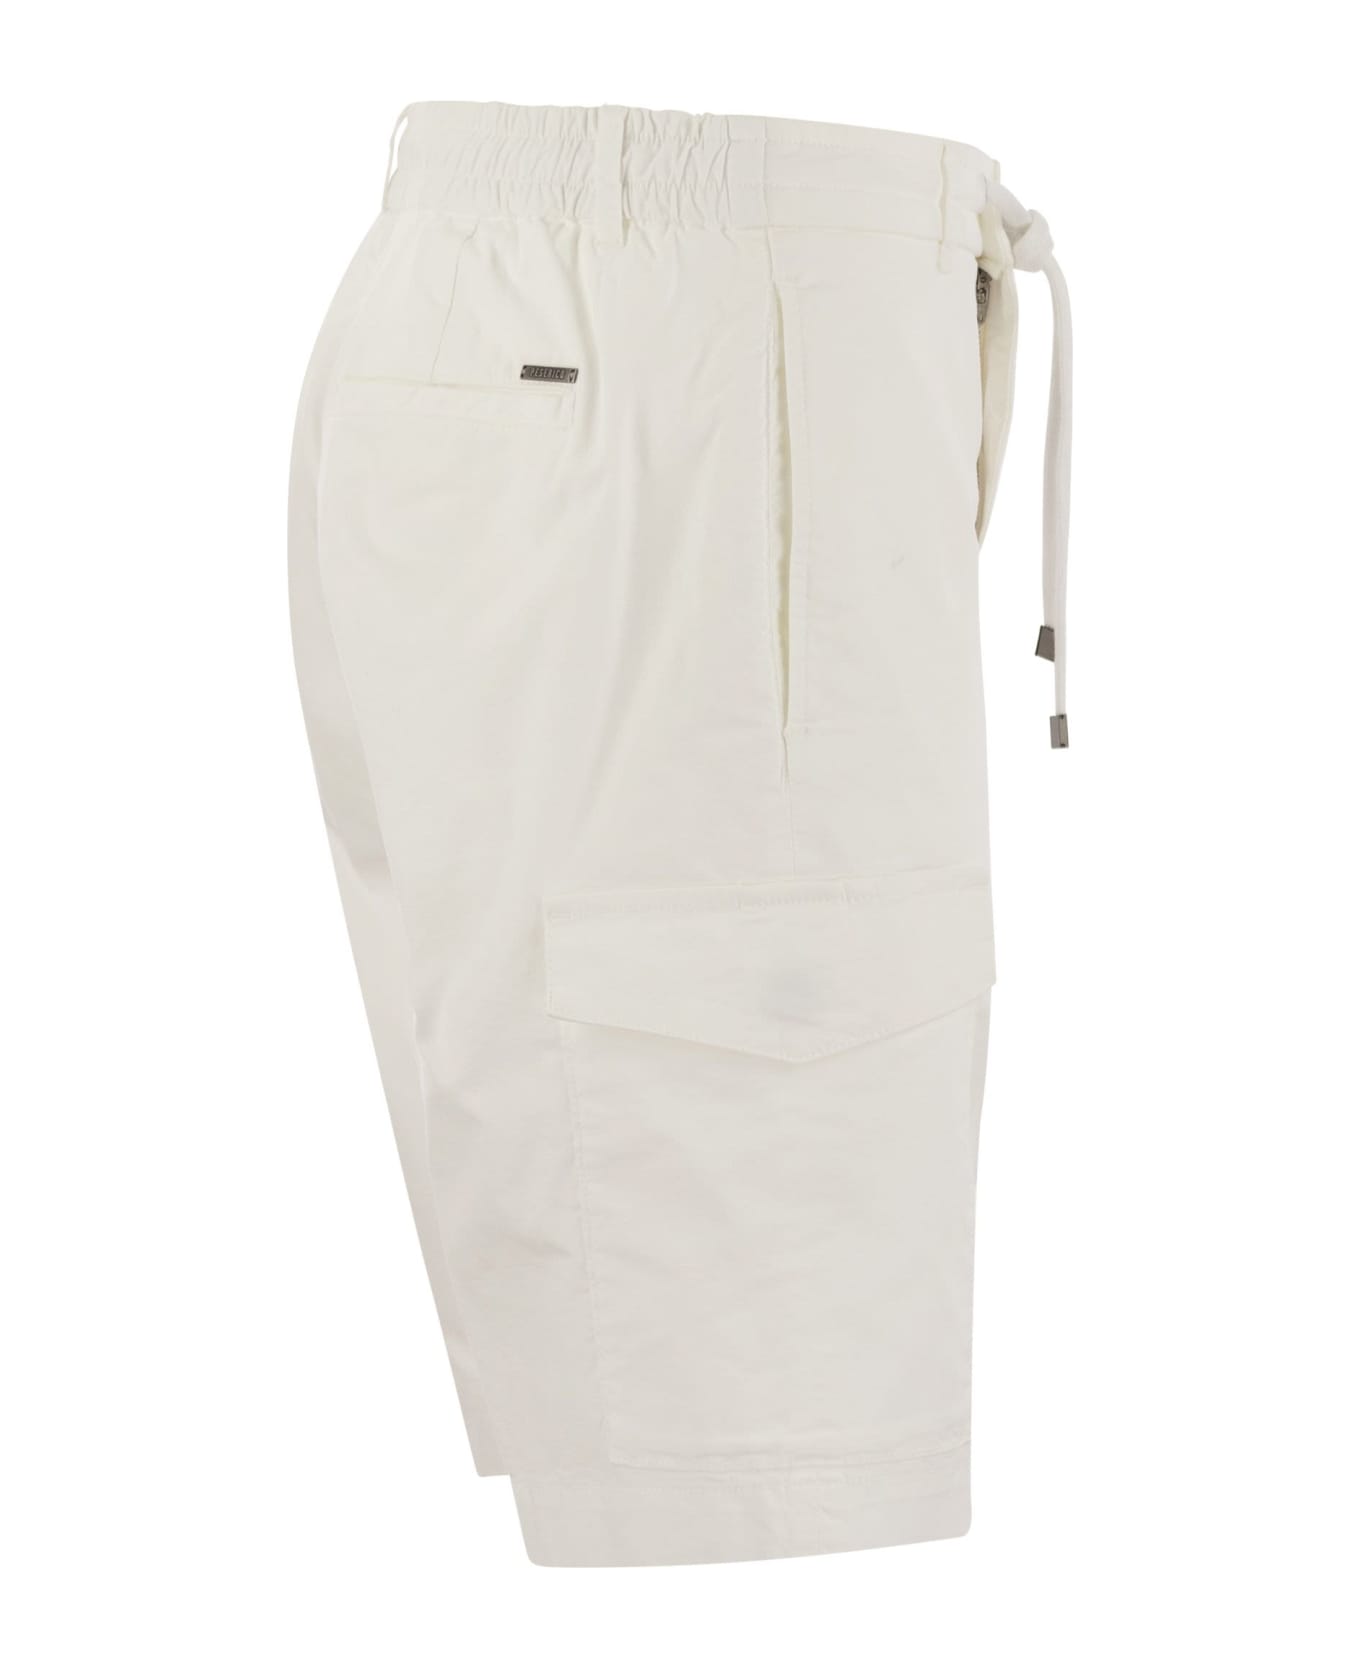 Peserico Lightweight Cotton Lyocell Canvas Jogger Bermuda Shorts - White